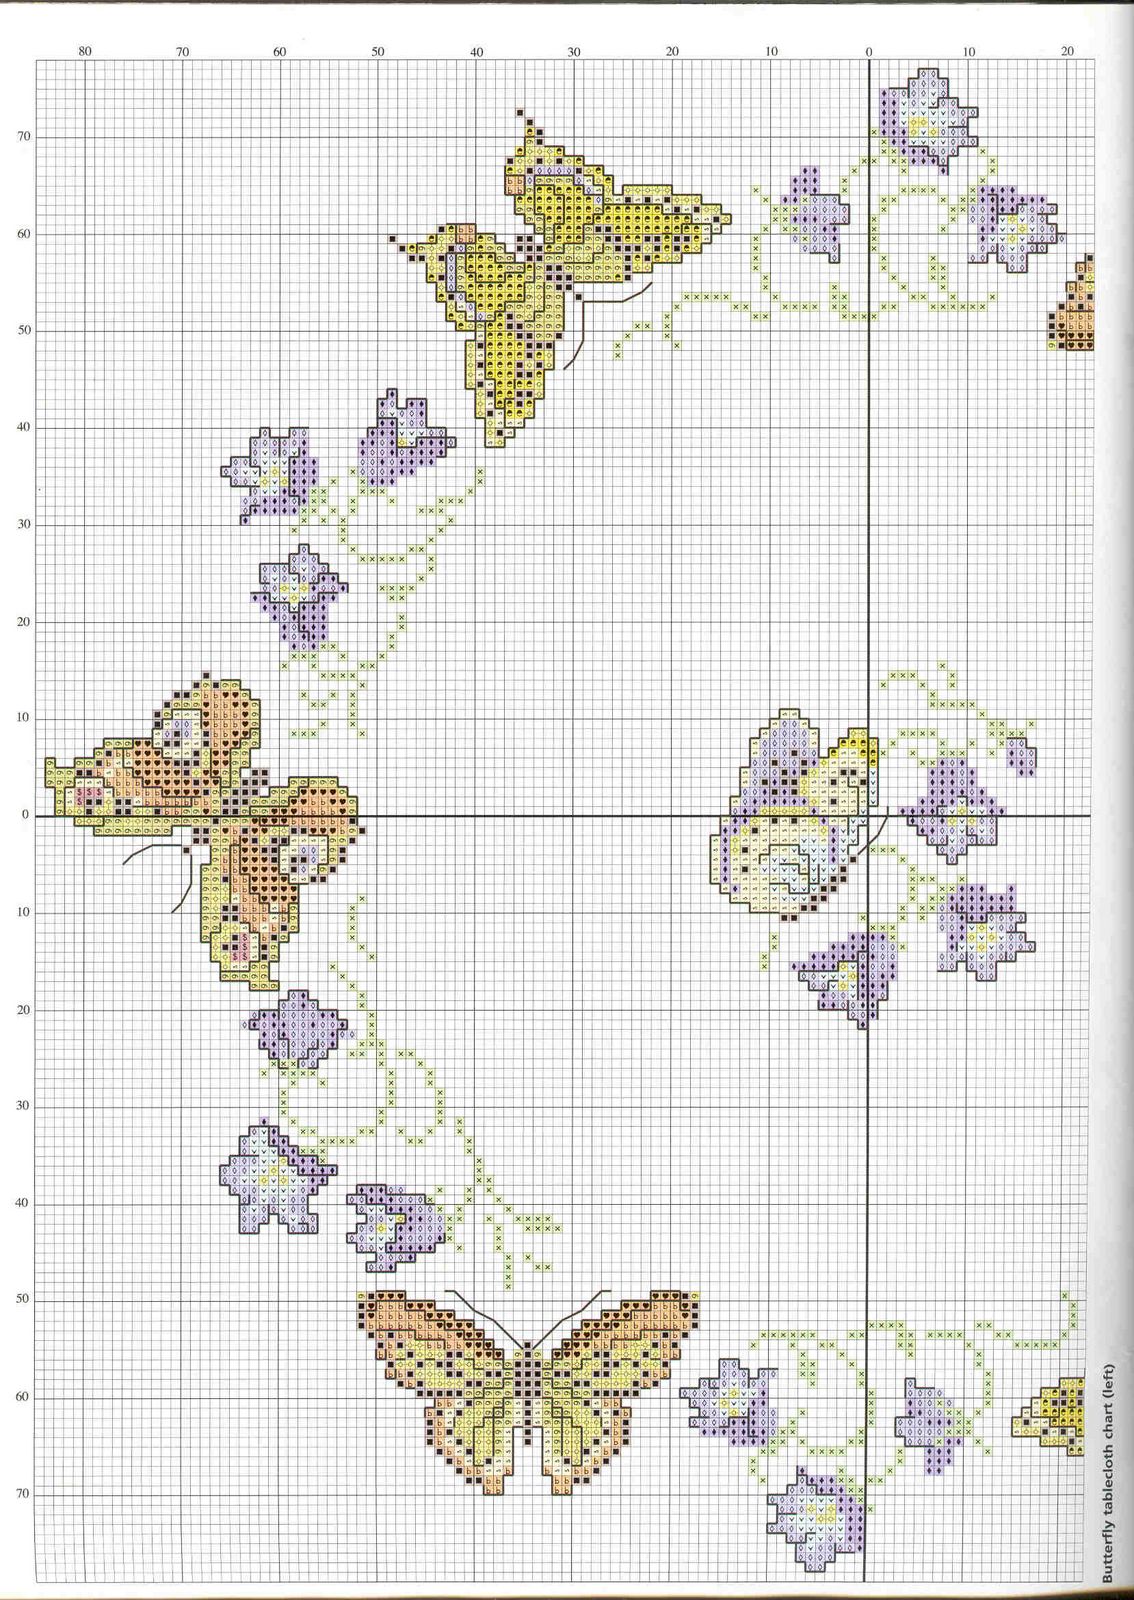 Circular pattern with butterflies (2)